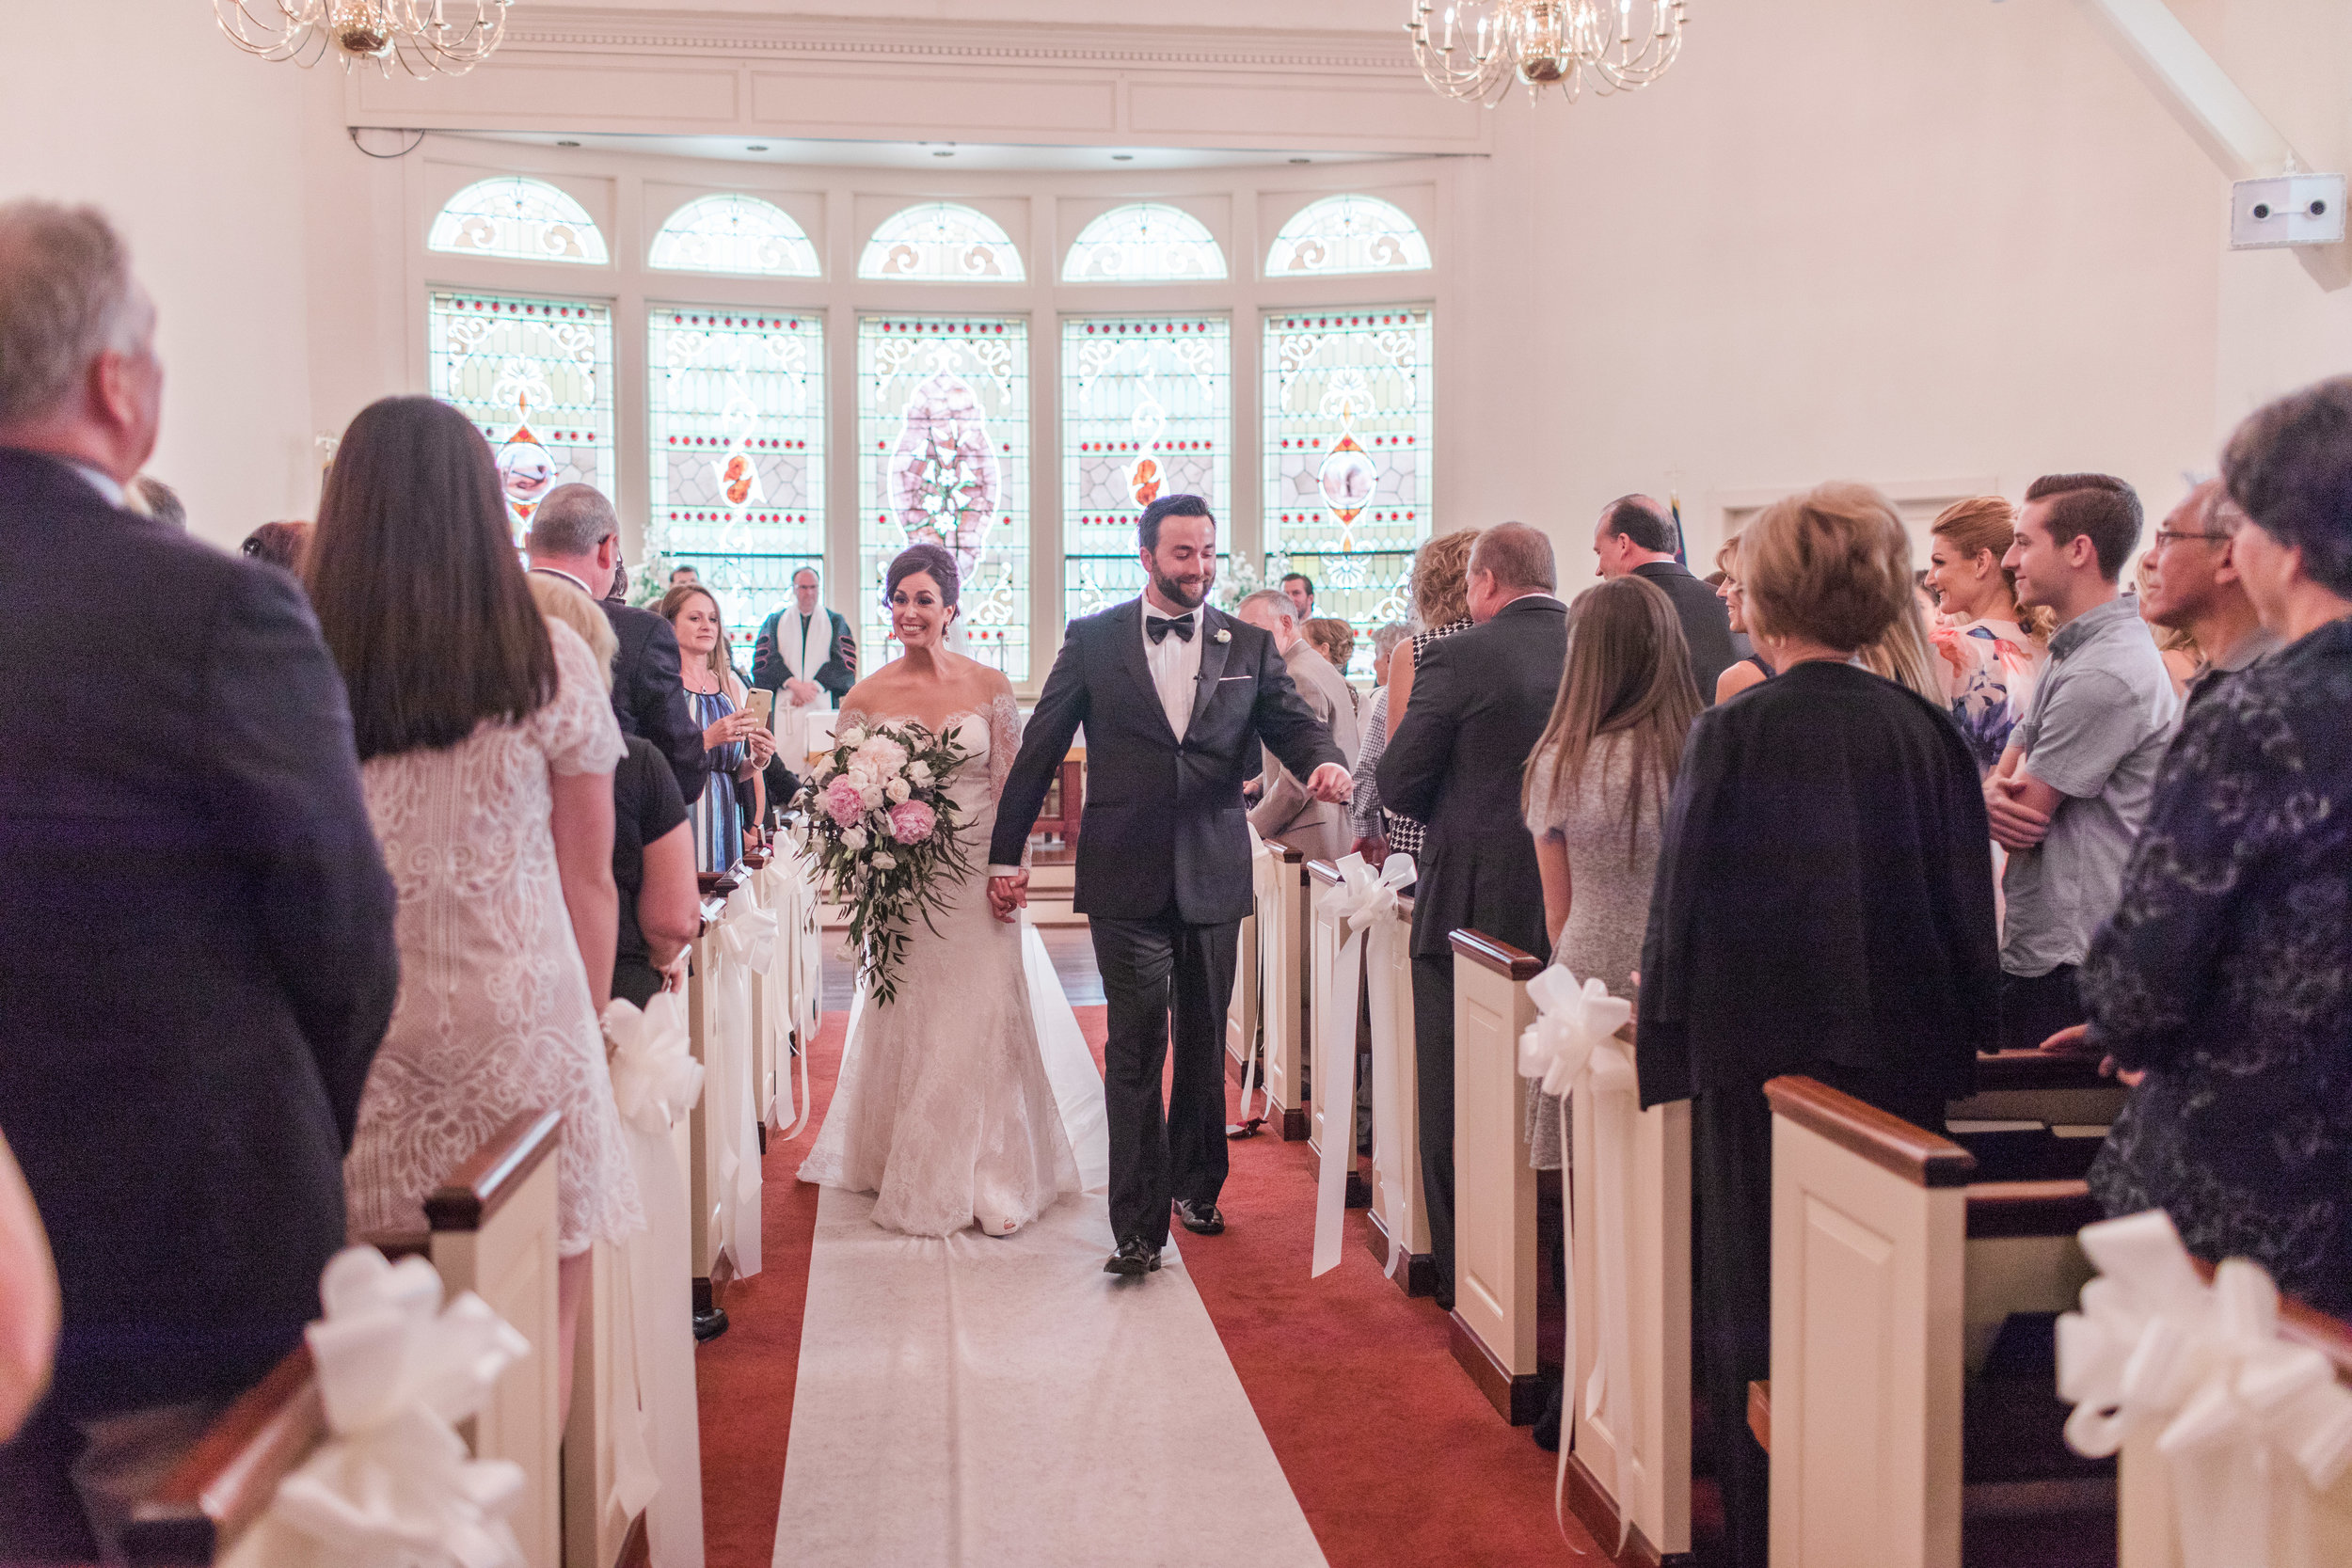 Poland Presbyterian Church & The Lake Club of Ohio Wedding_Lindsey Ramdin_LAR WEDDINGS